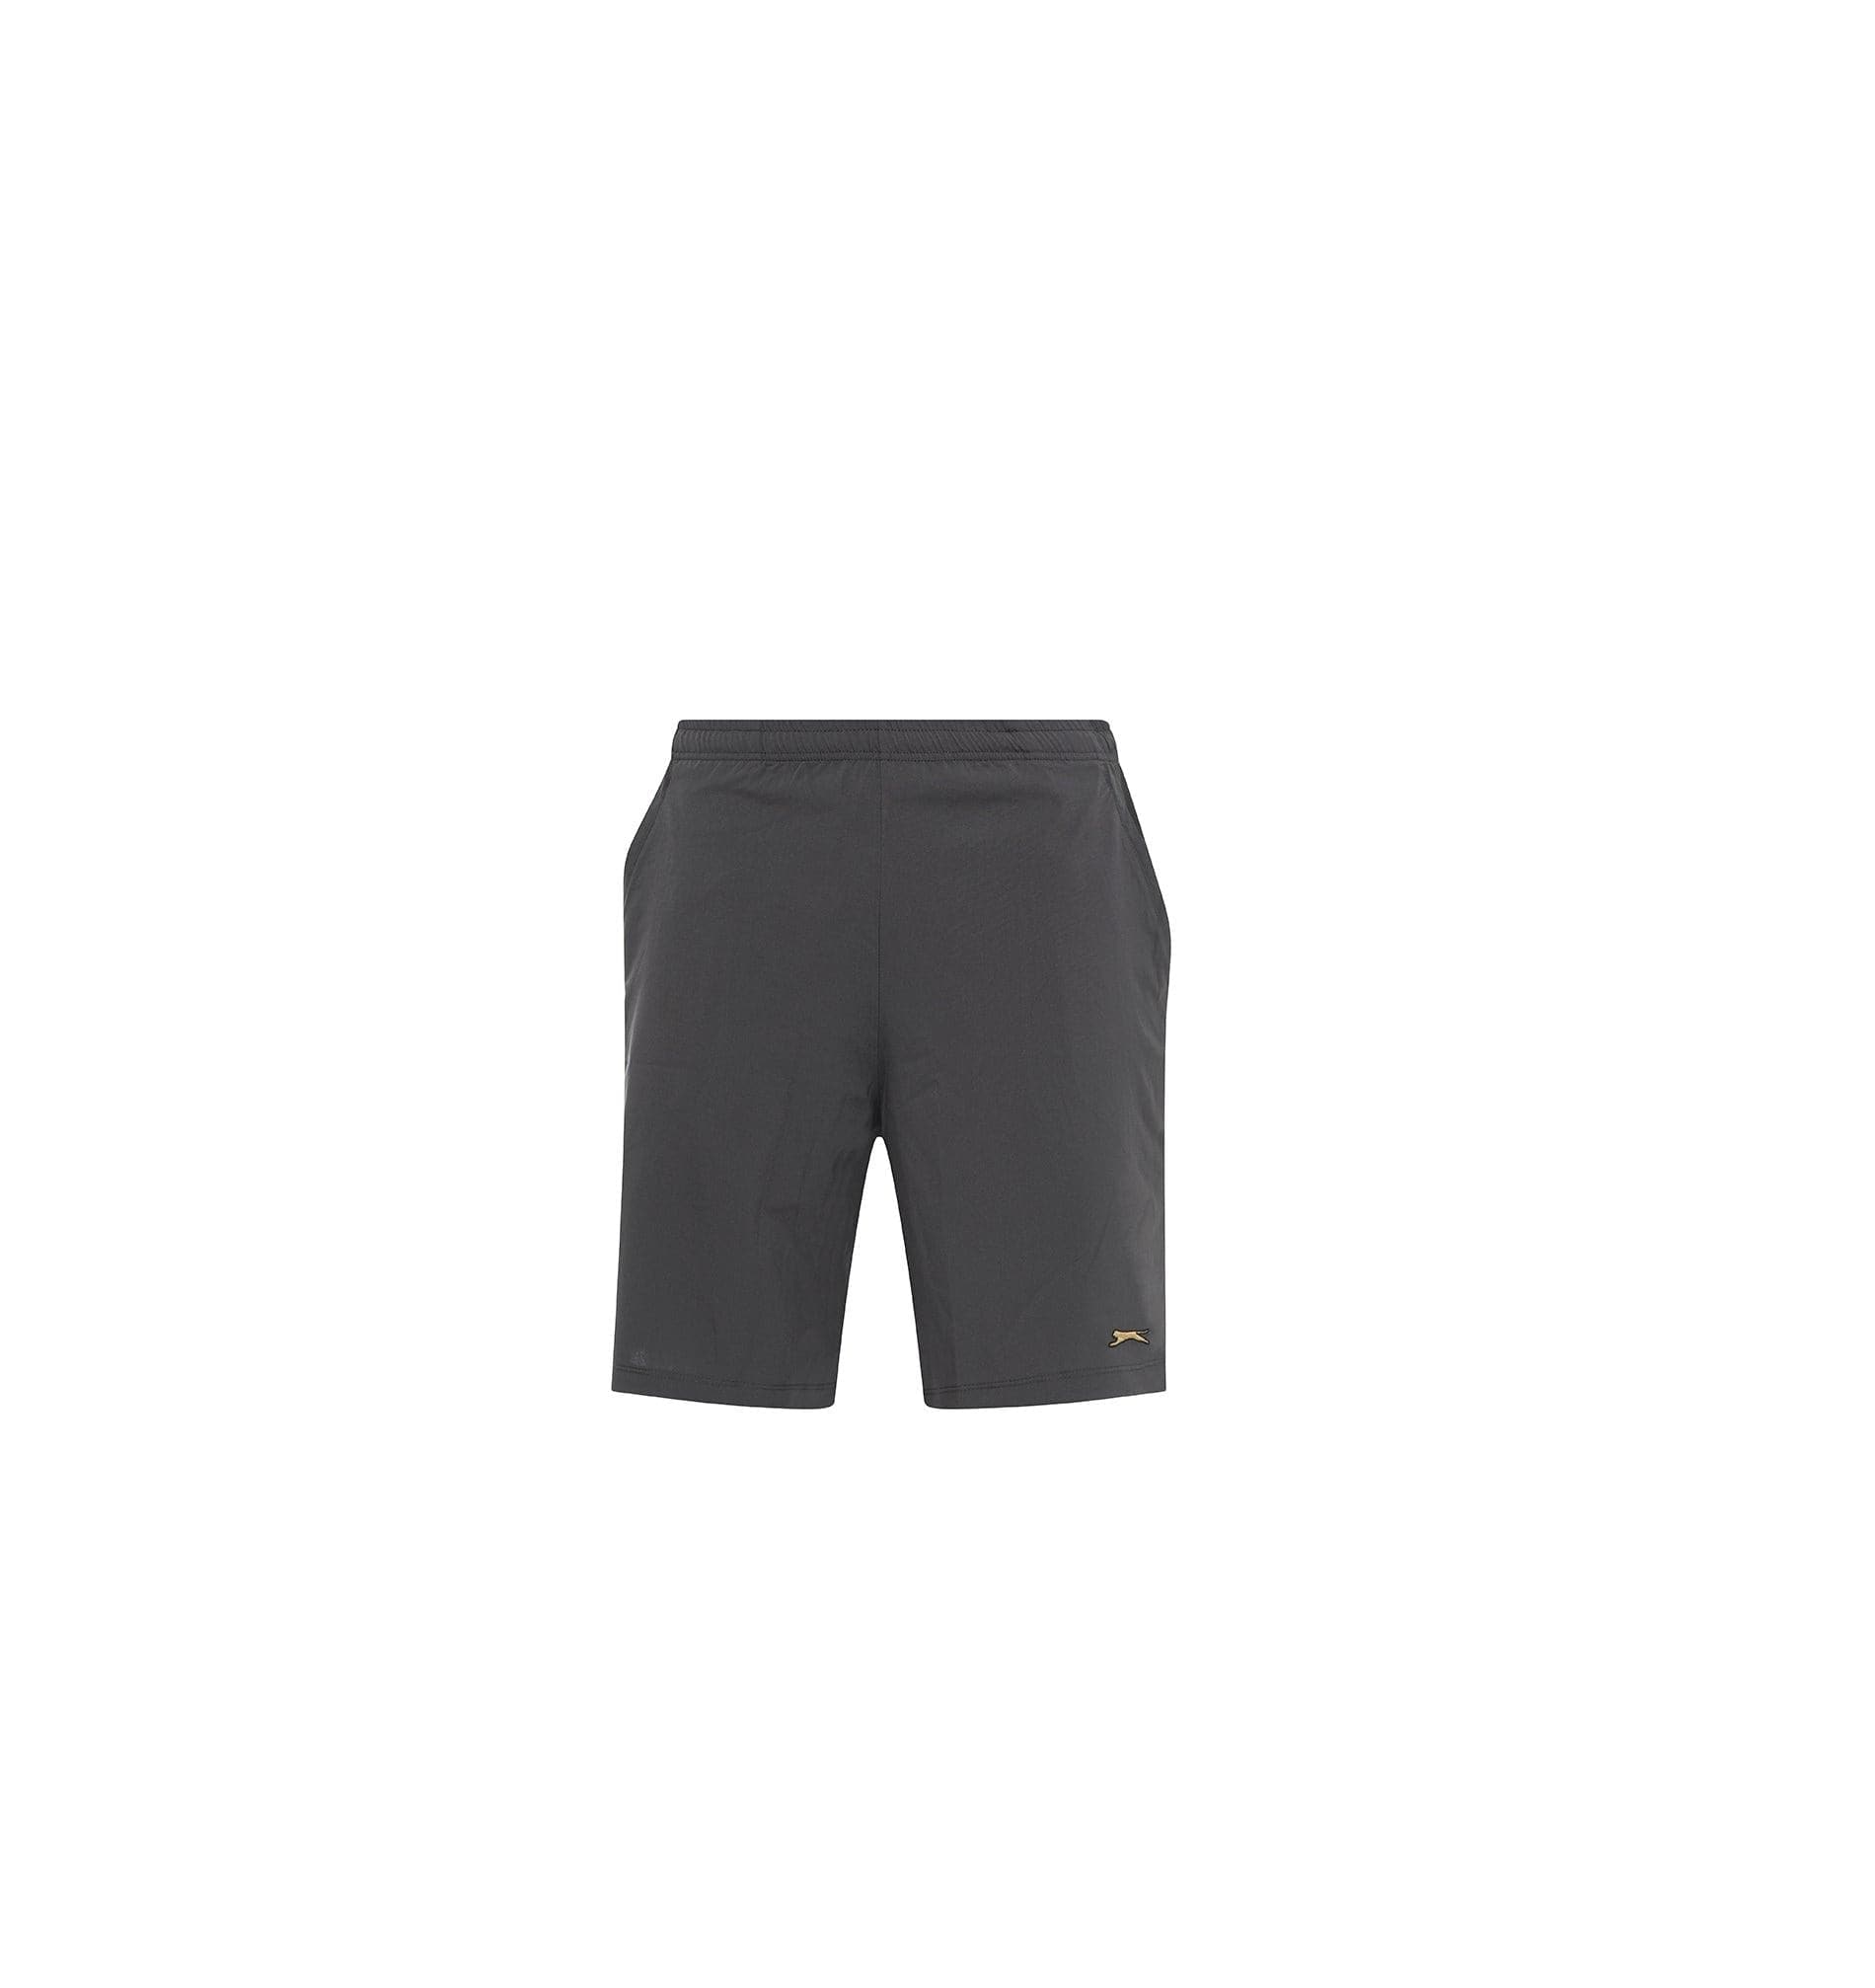 Jimmy Shorts Graphite-Shorts-Padel Corner-Clothing, pfs:label-Coming Soon, Shorts, Slazenger